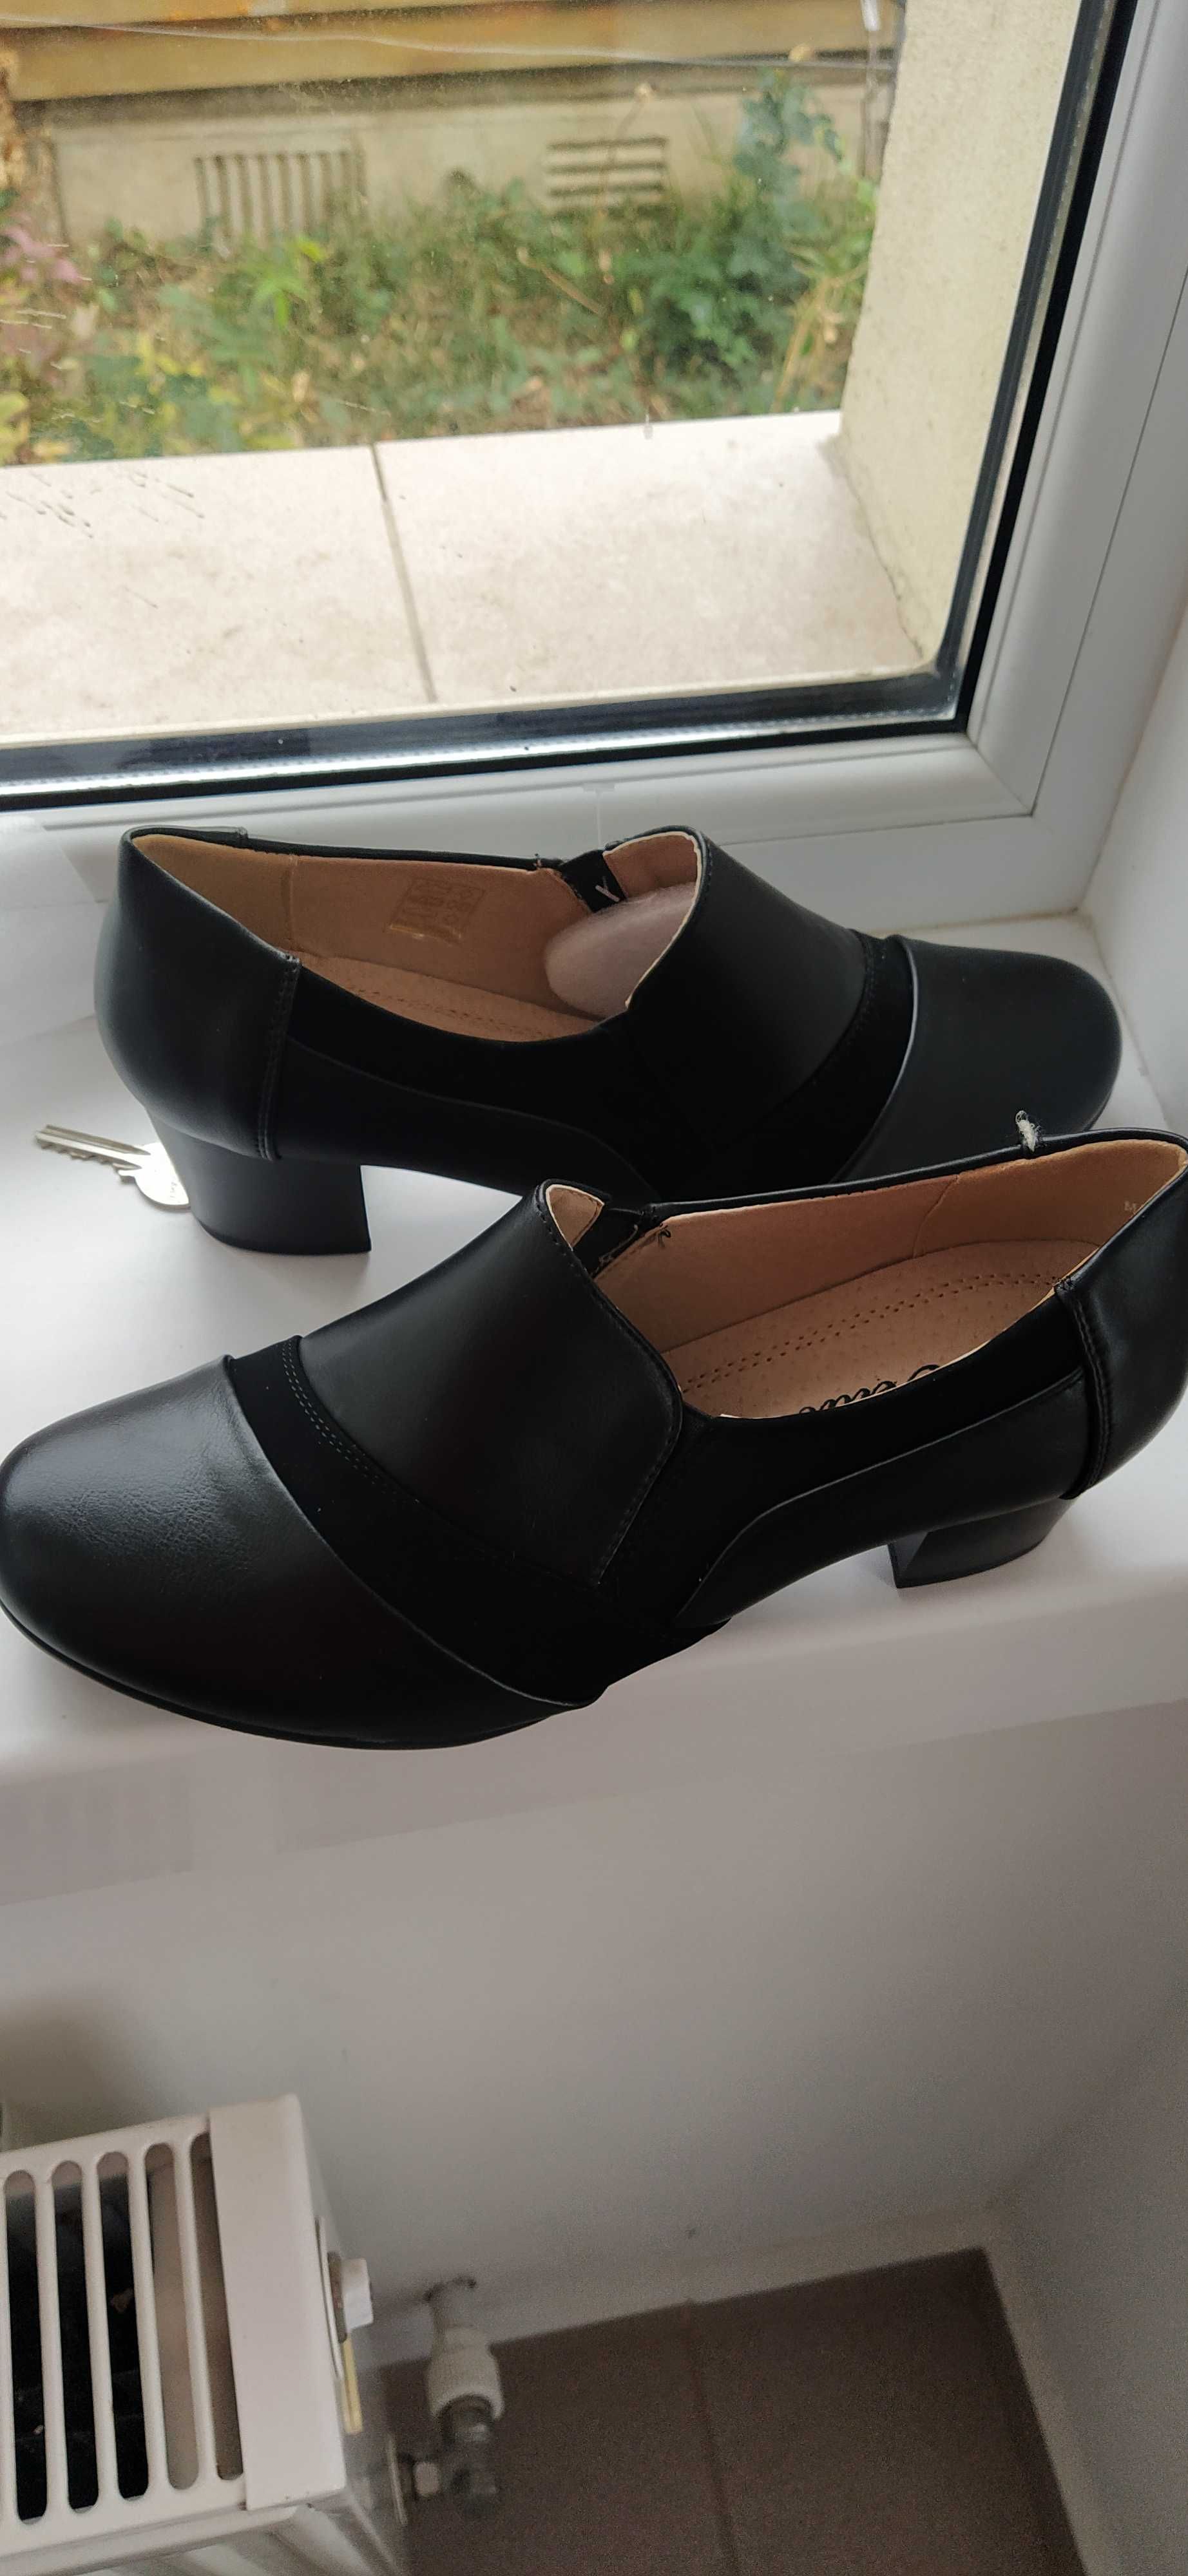 Pantofi dama Nr 41 eleganți piele neagra Weide. Noi